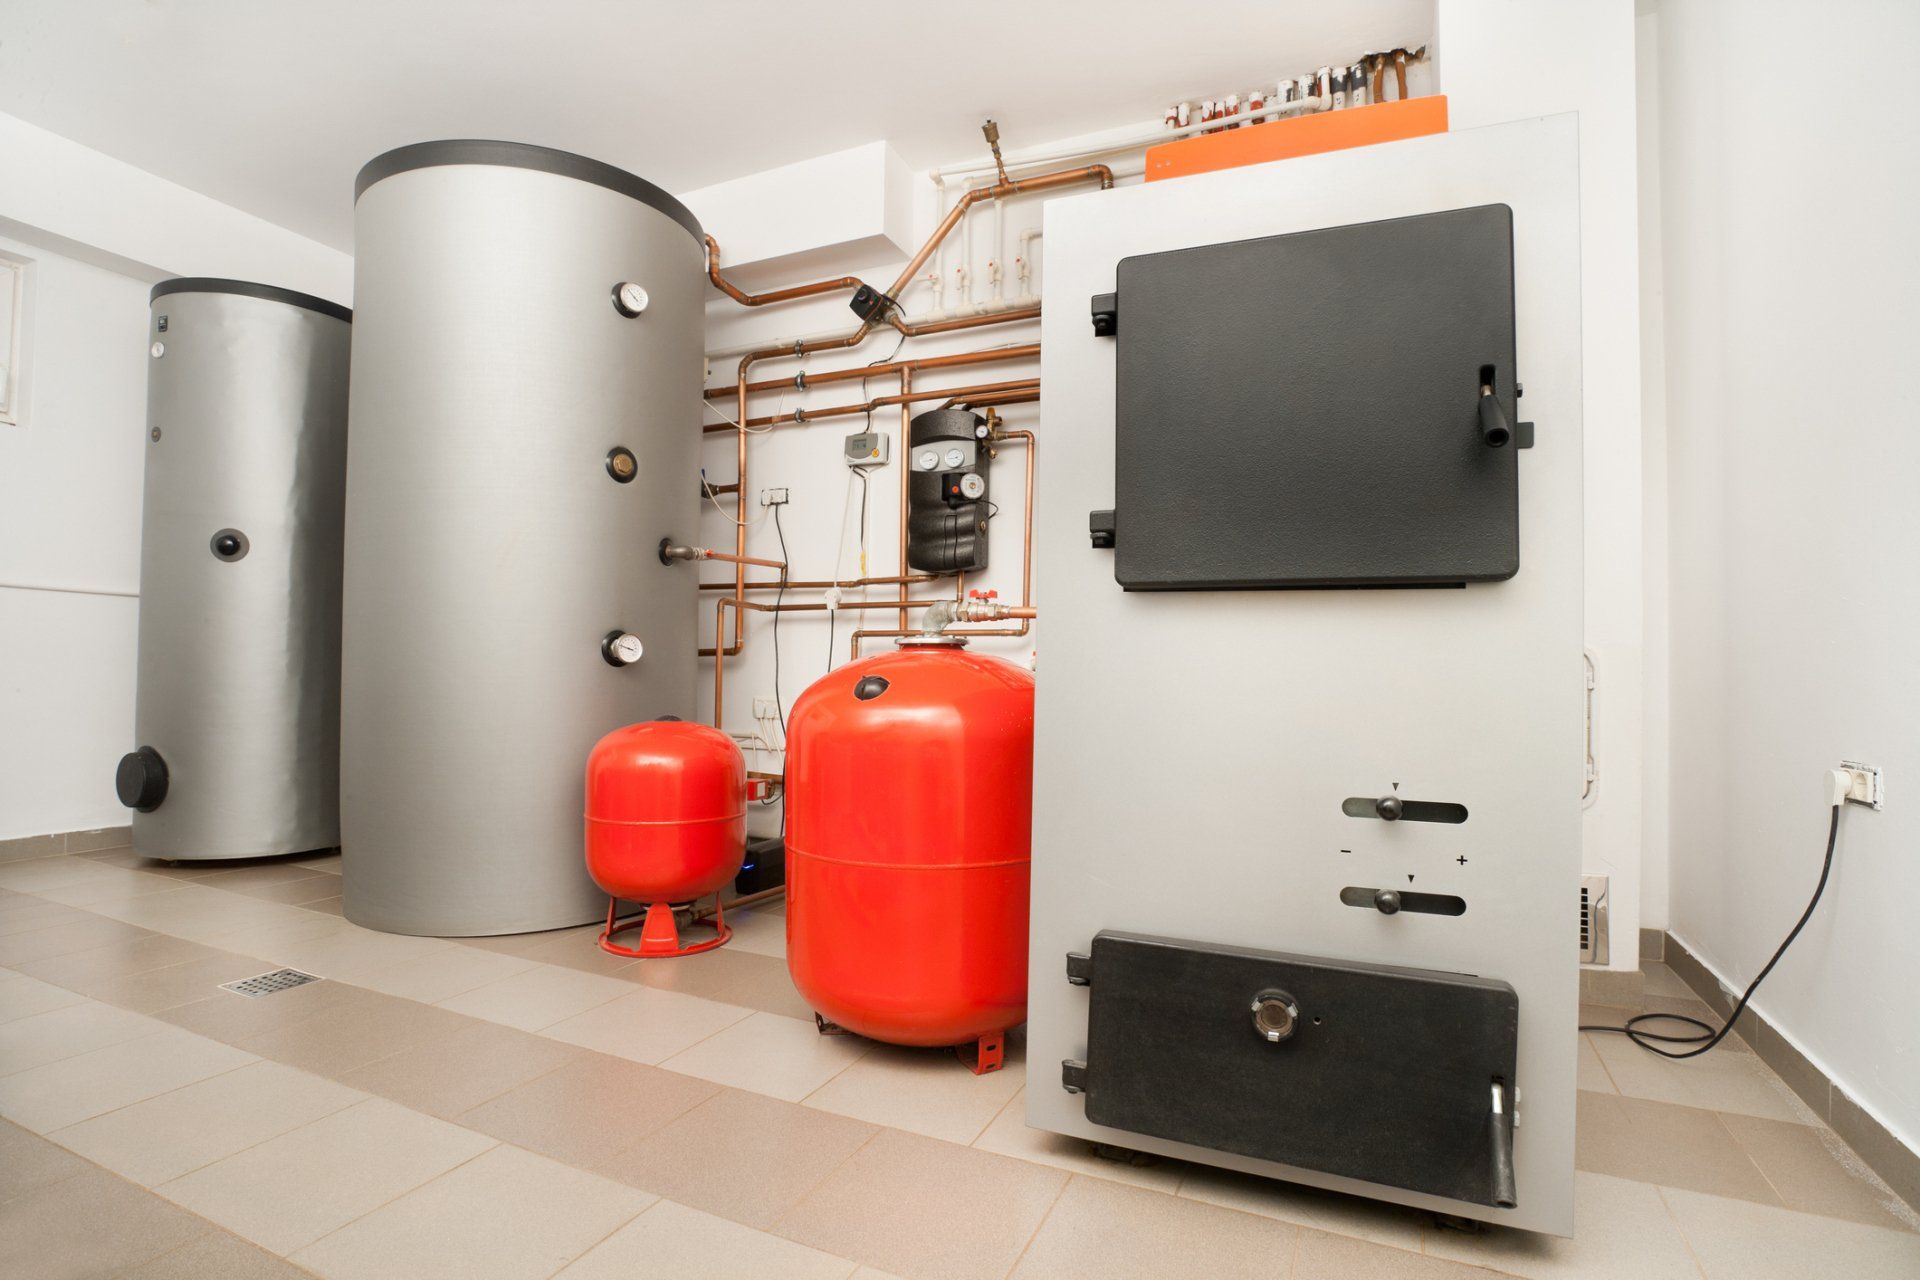 House Heating Unit — Marlborough MA  — Bob Dolan Plumbing, Heating & Remodeling